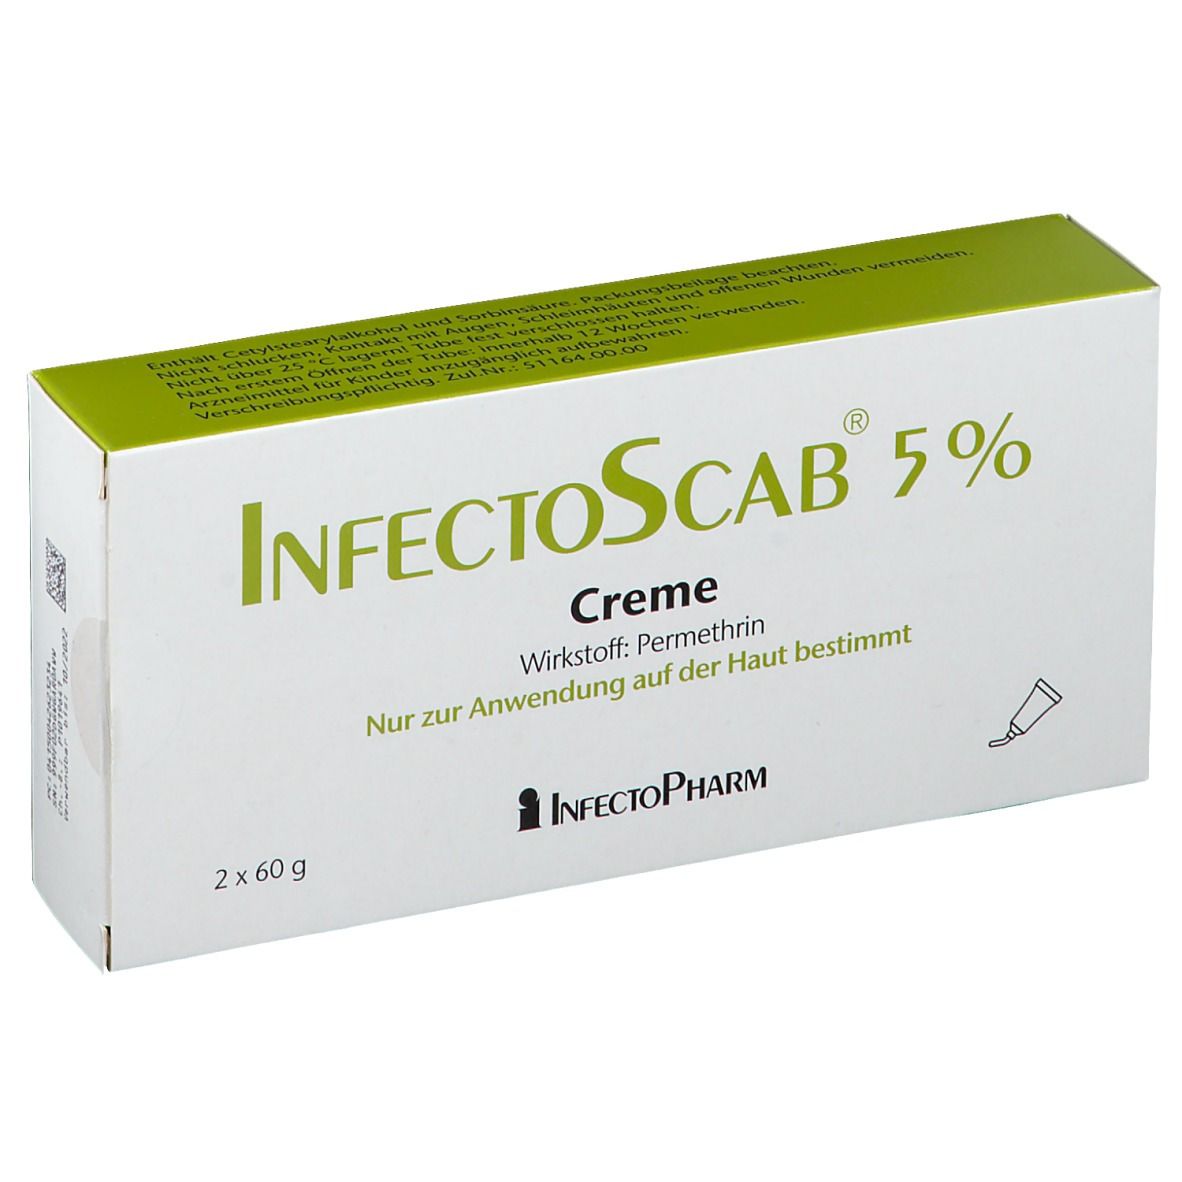 InfectoScab® 5 % 2x60 g mit dem E-Rezept kaufen - SHOP APOTHEKE